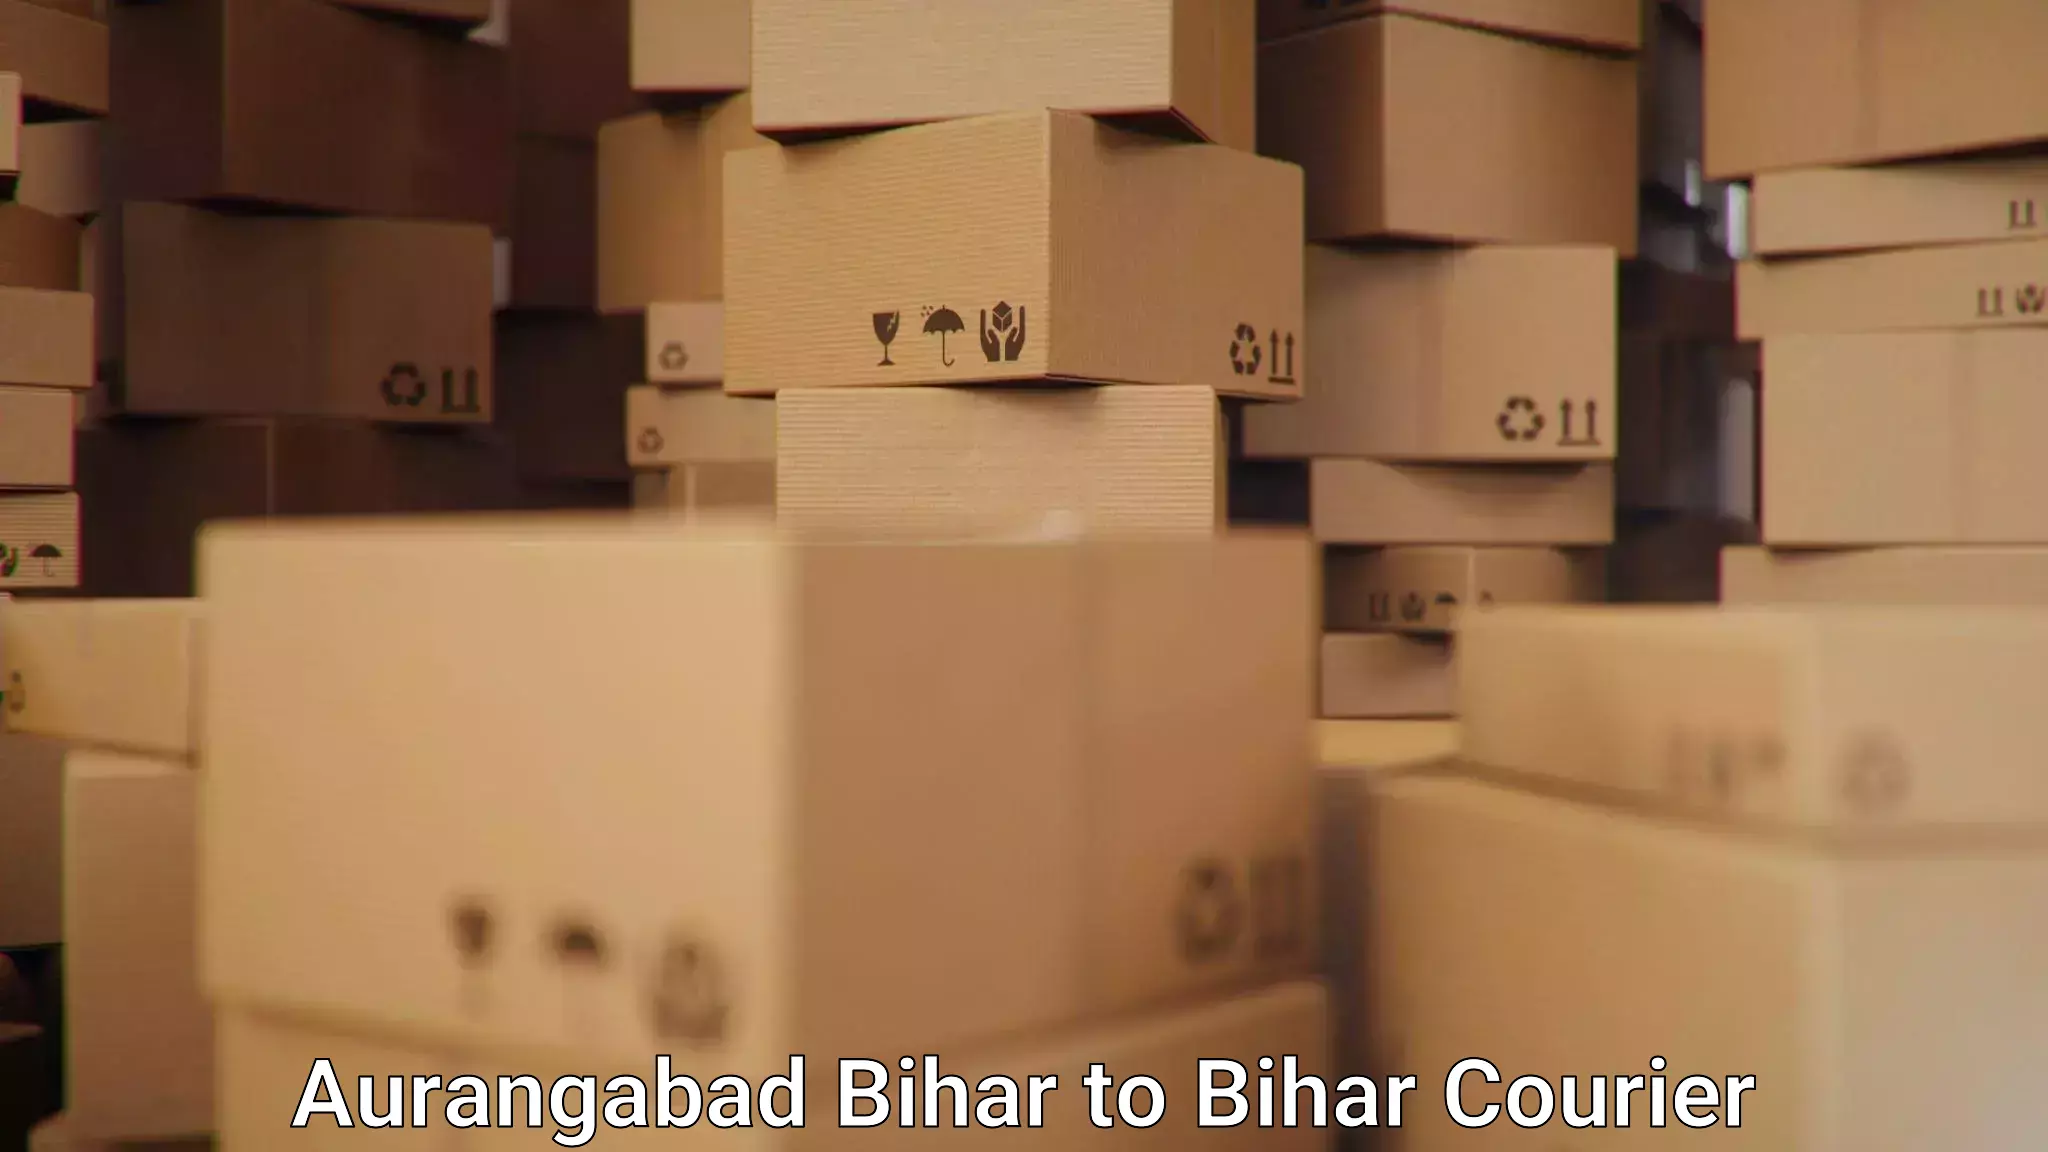 24-hour courier services Aurangabad Bihar to Jiwdhara